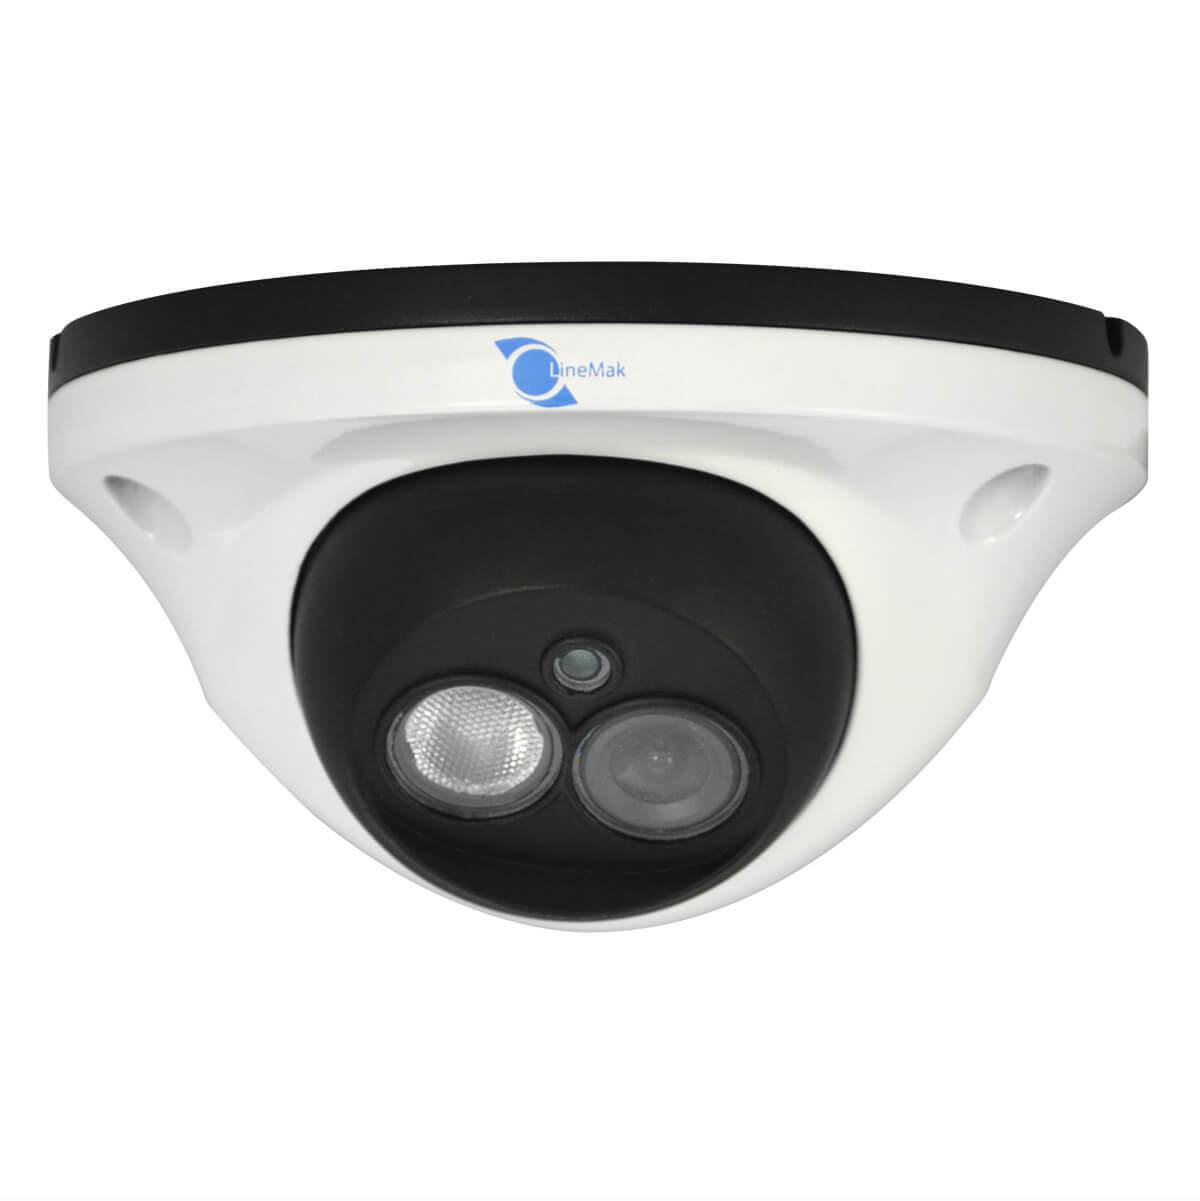 Camara tipo domo, Sensor Sony CCD 1/3, 700TVL, 1 LED Array, 25m IR